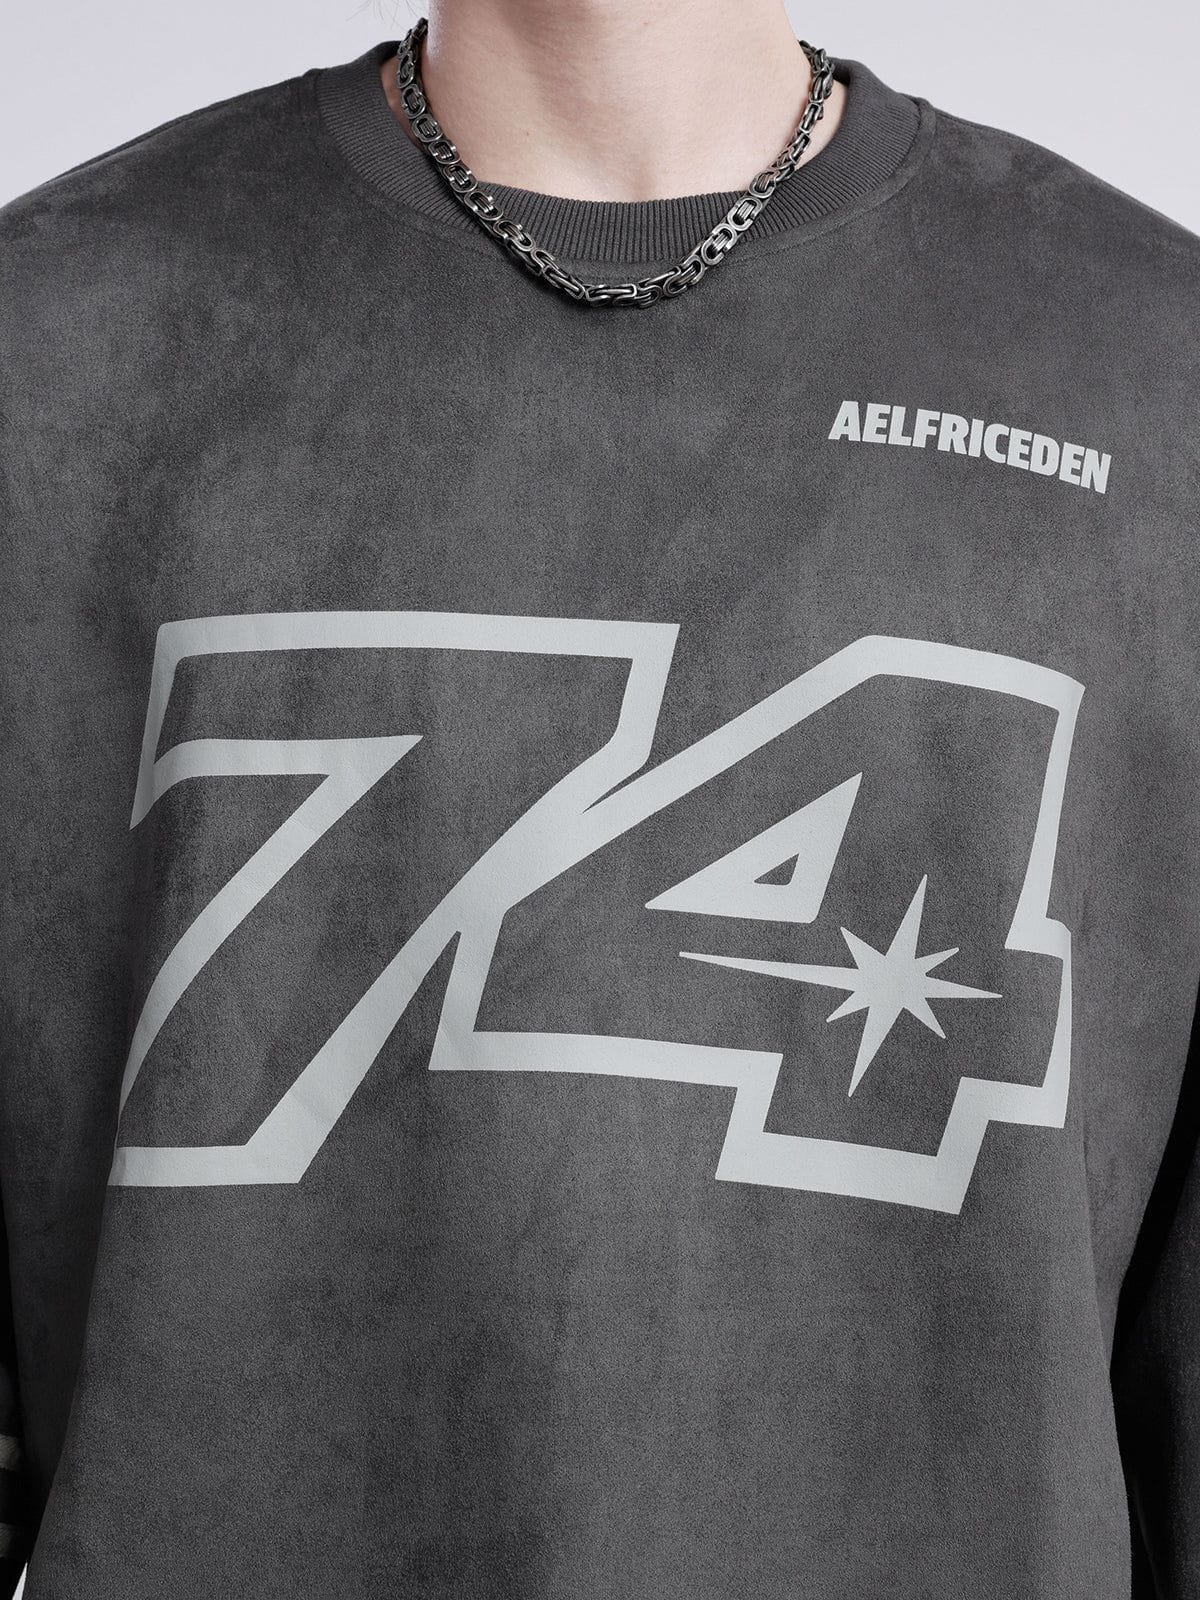 Aelfric Eden No.74 Lettered Sweatshirt